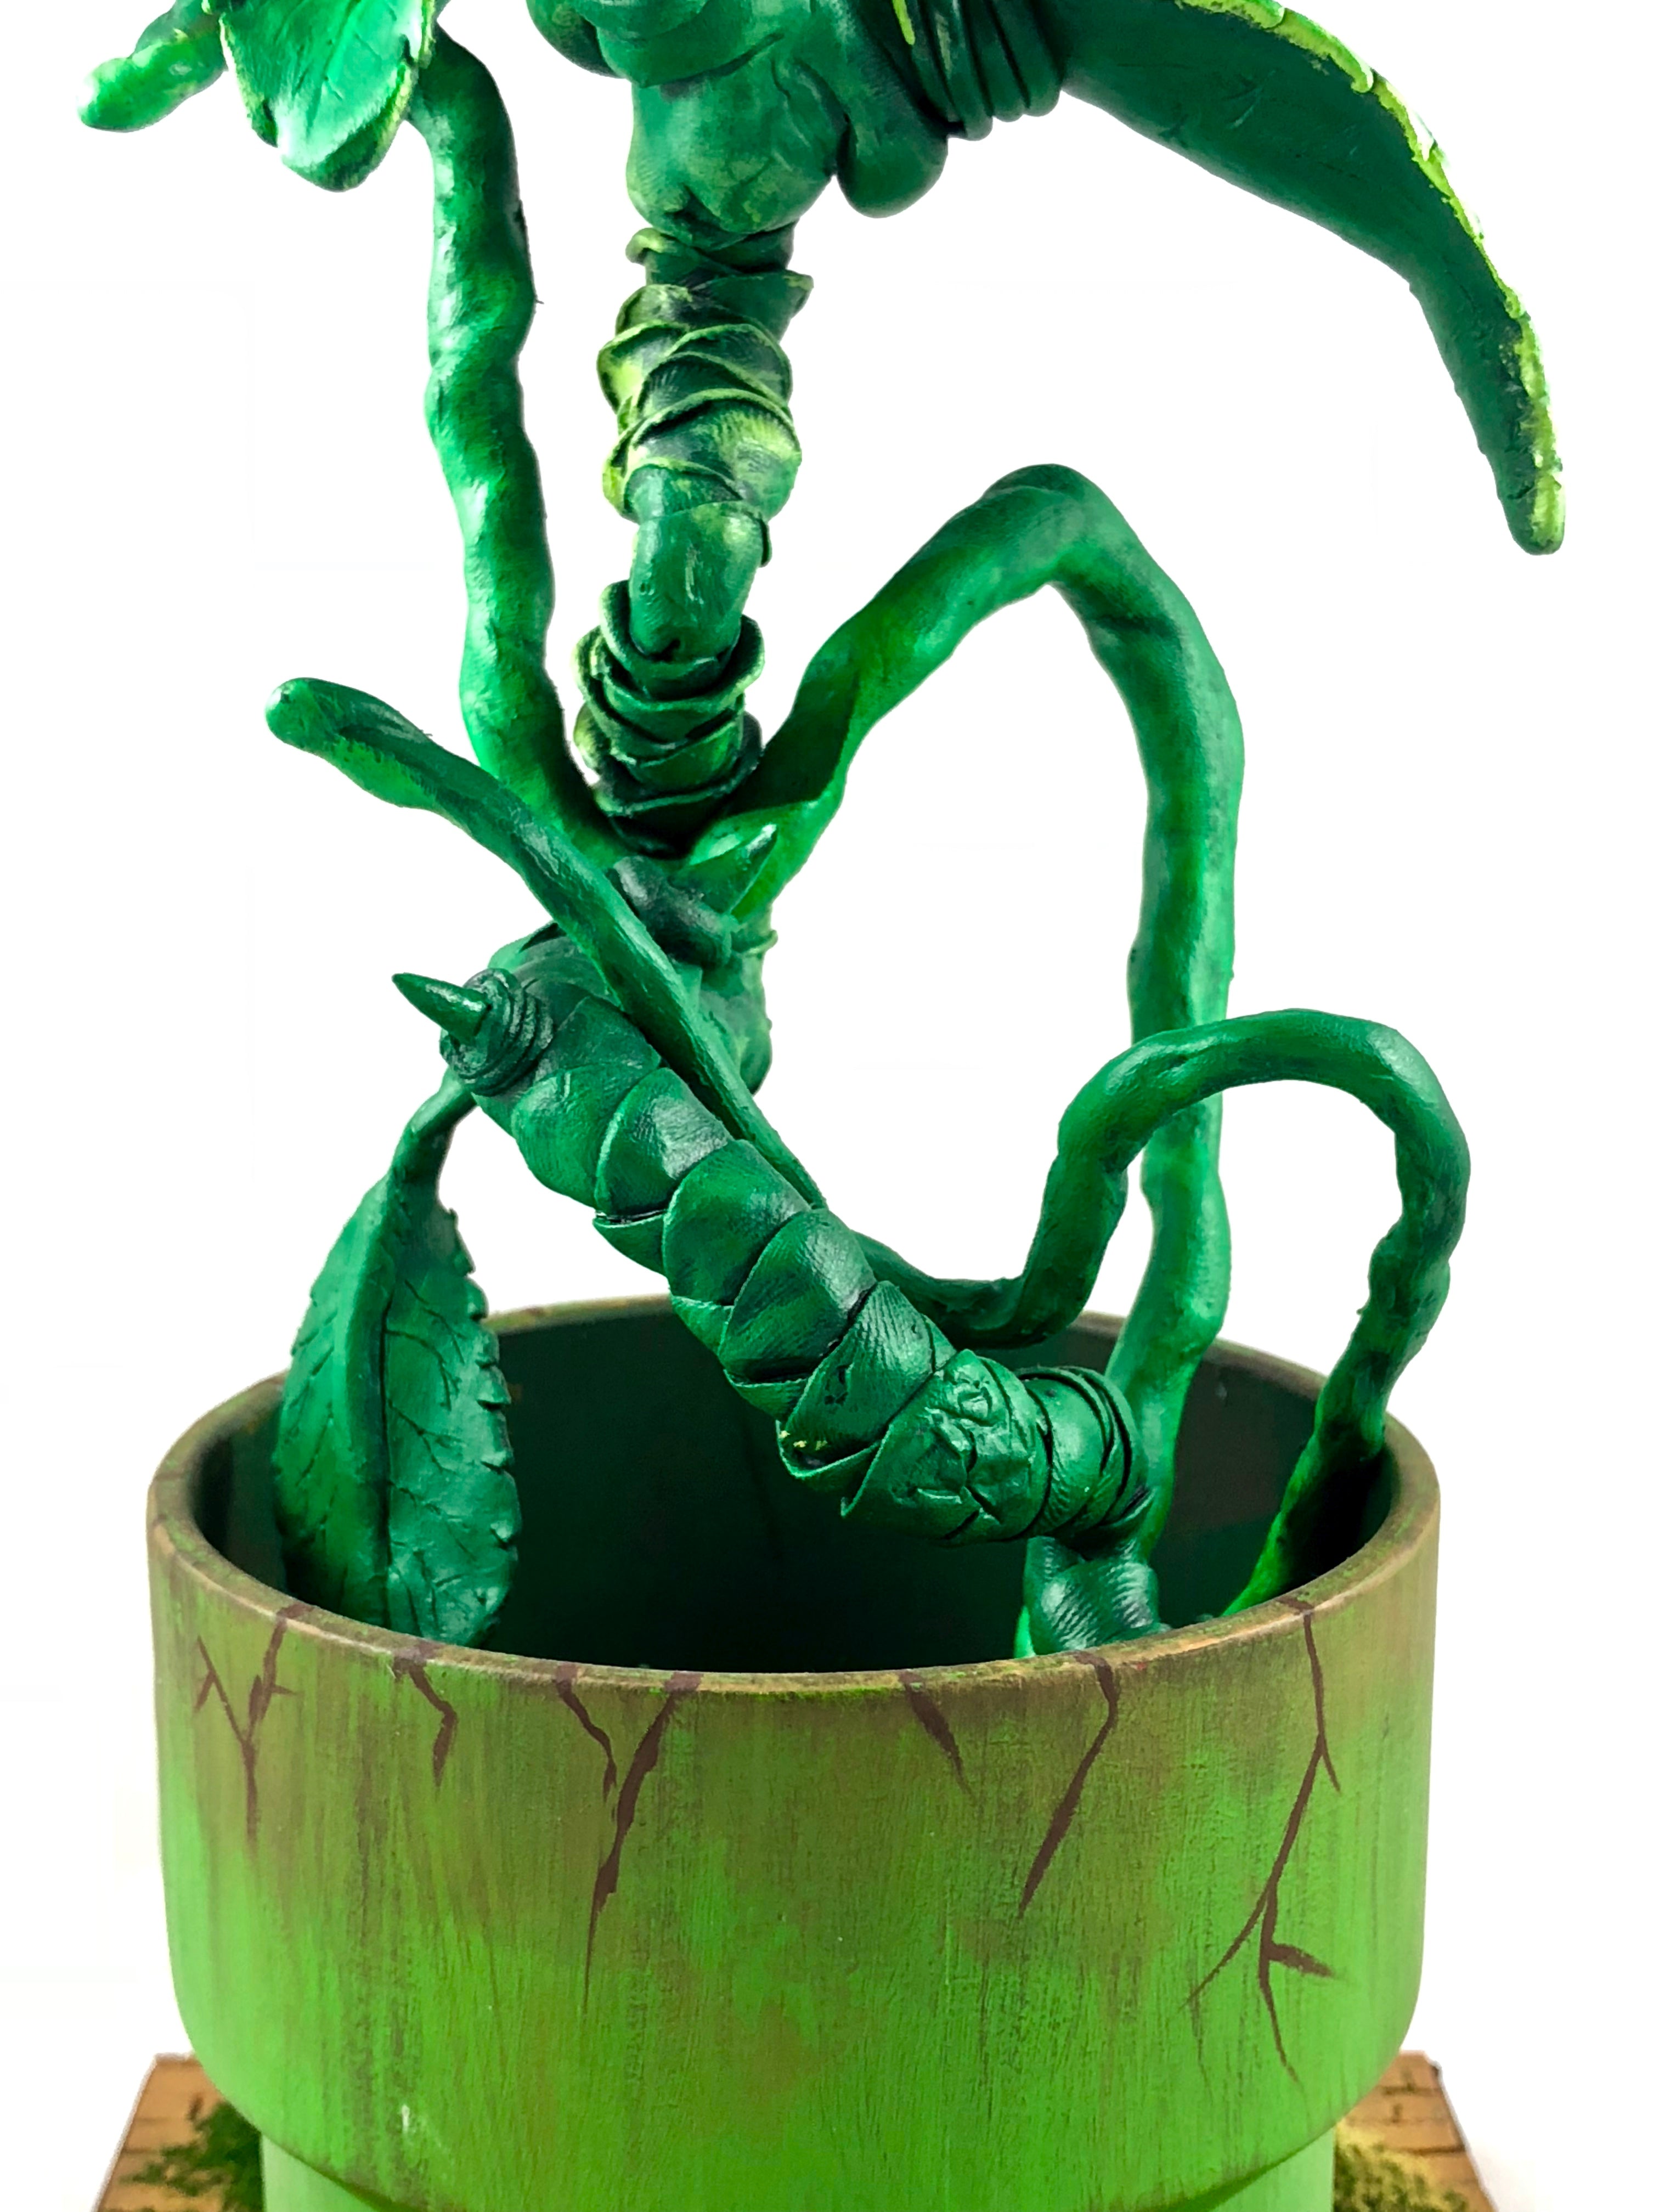 Twisted Mario Piranha Plant - RedGuardian Art & Toys